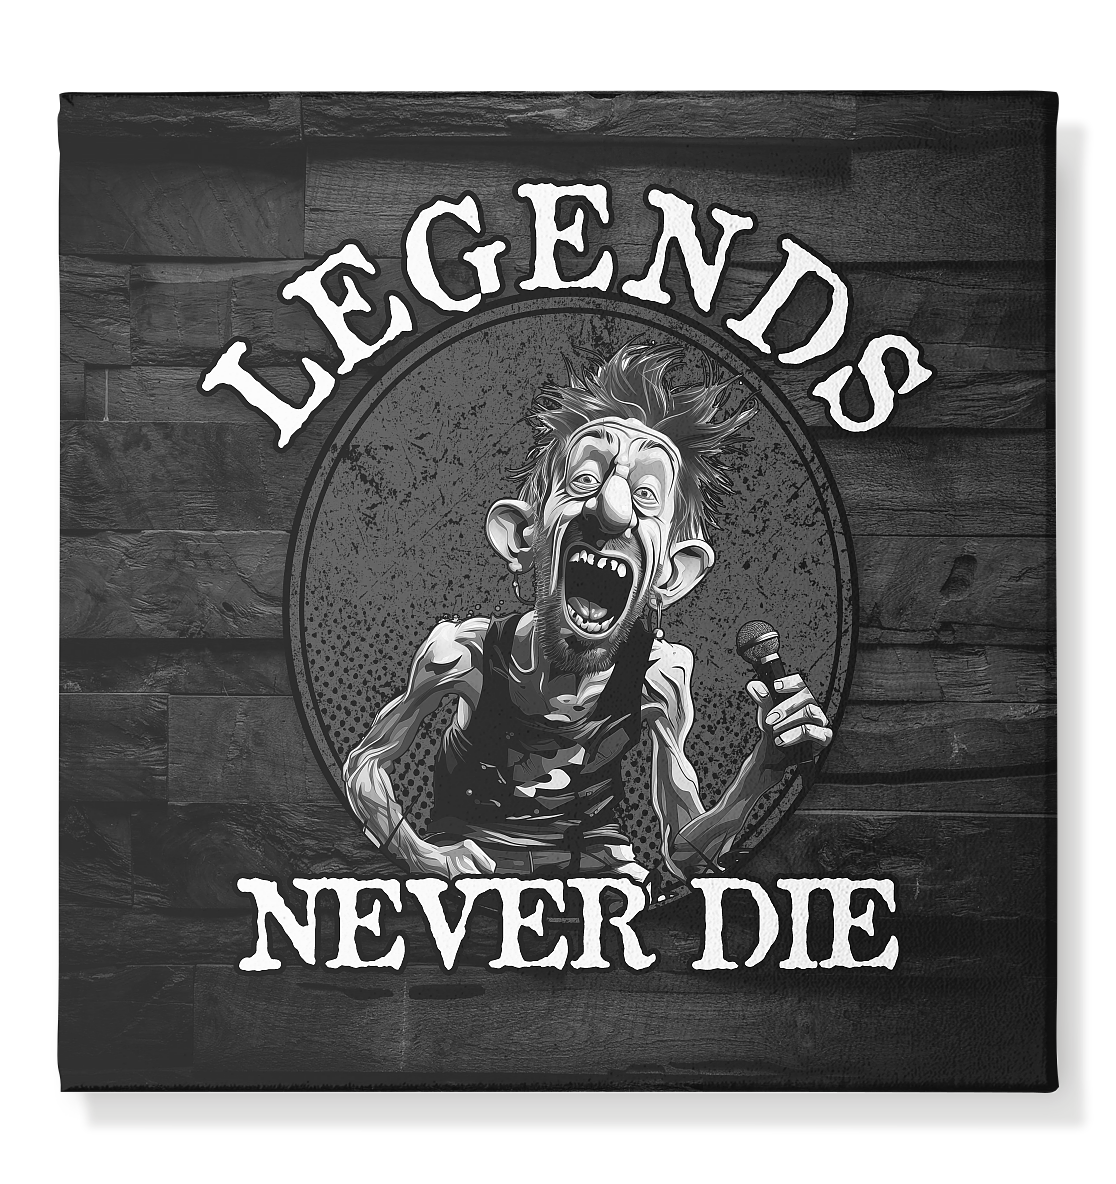 Legends Never Die - Leinwand 50x50cm